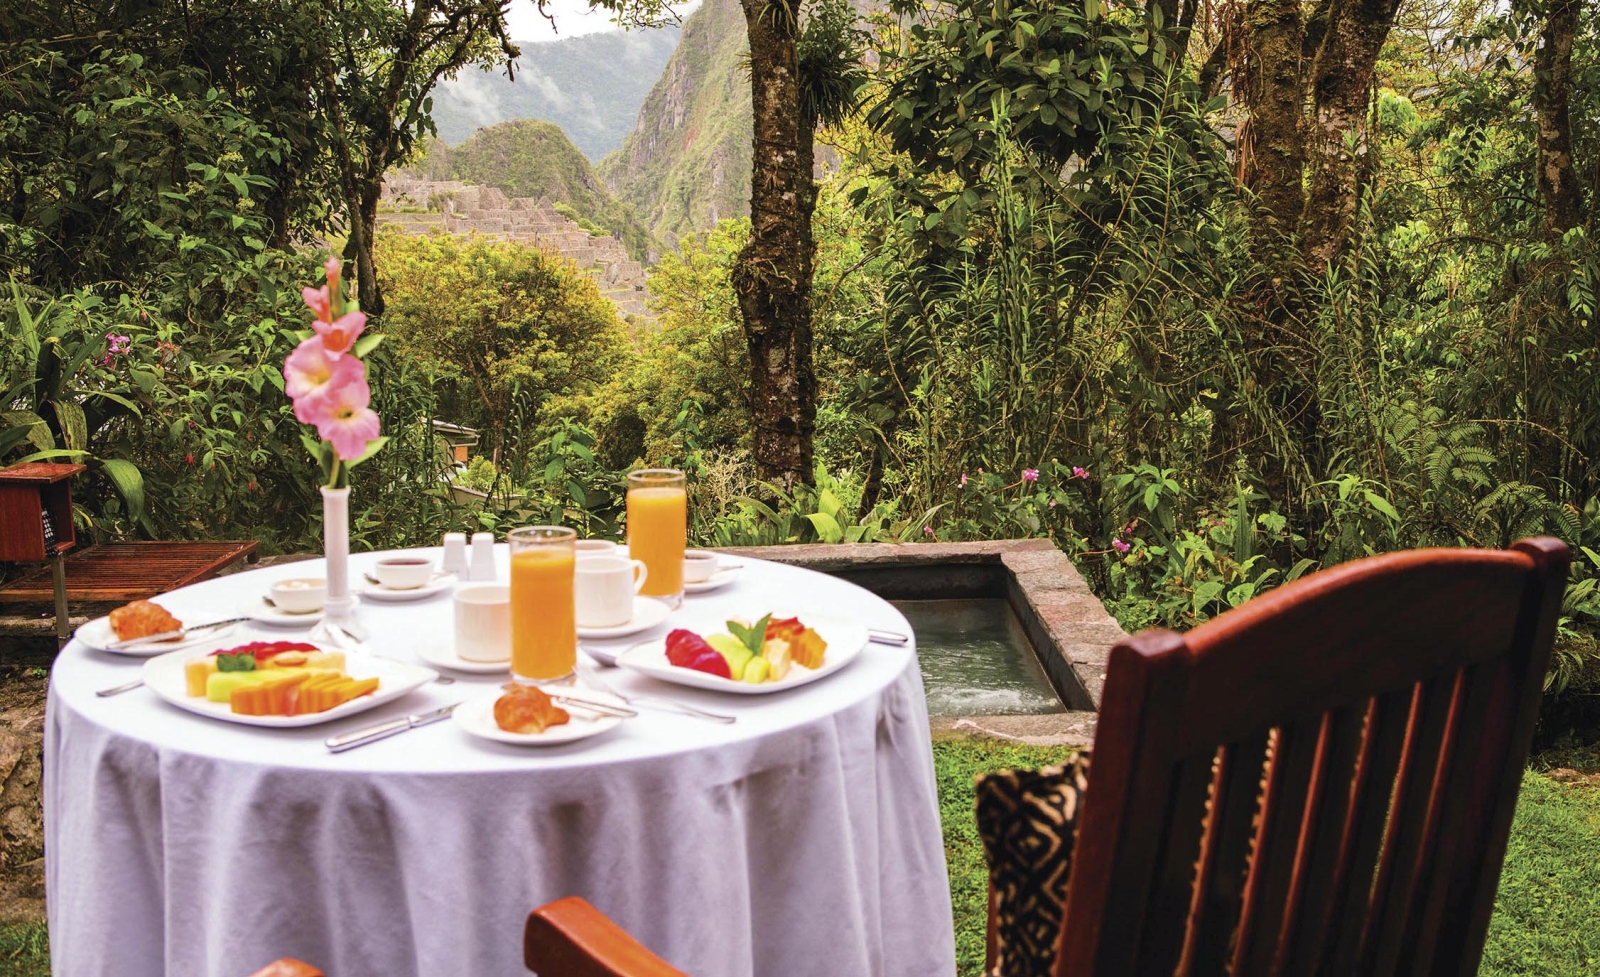 Dining at Belmond Sanctuary Lodge in Peru